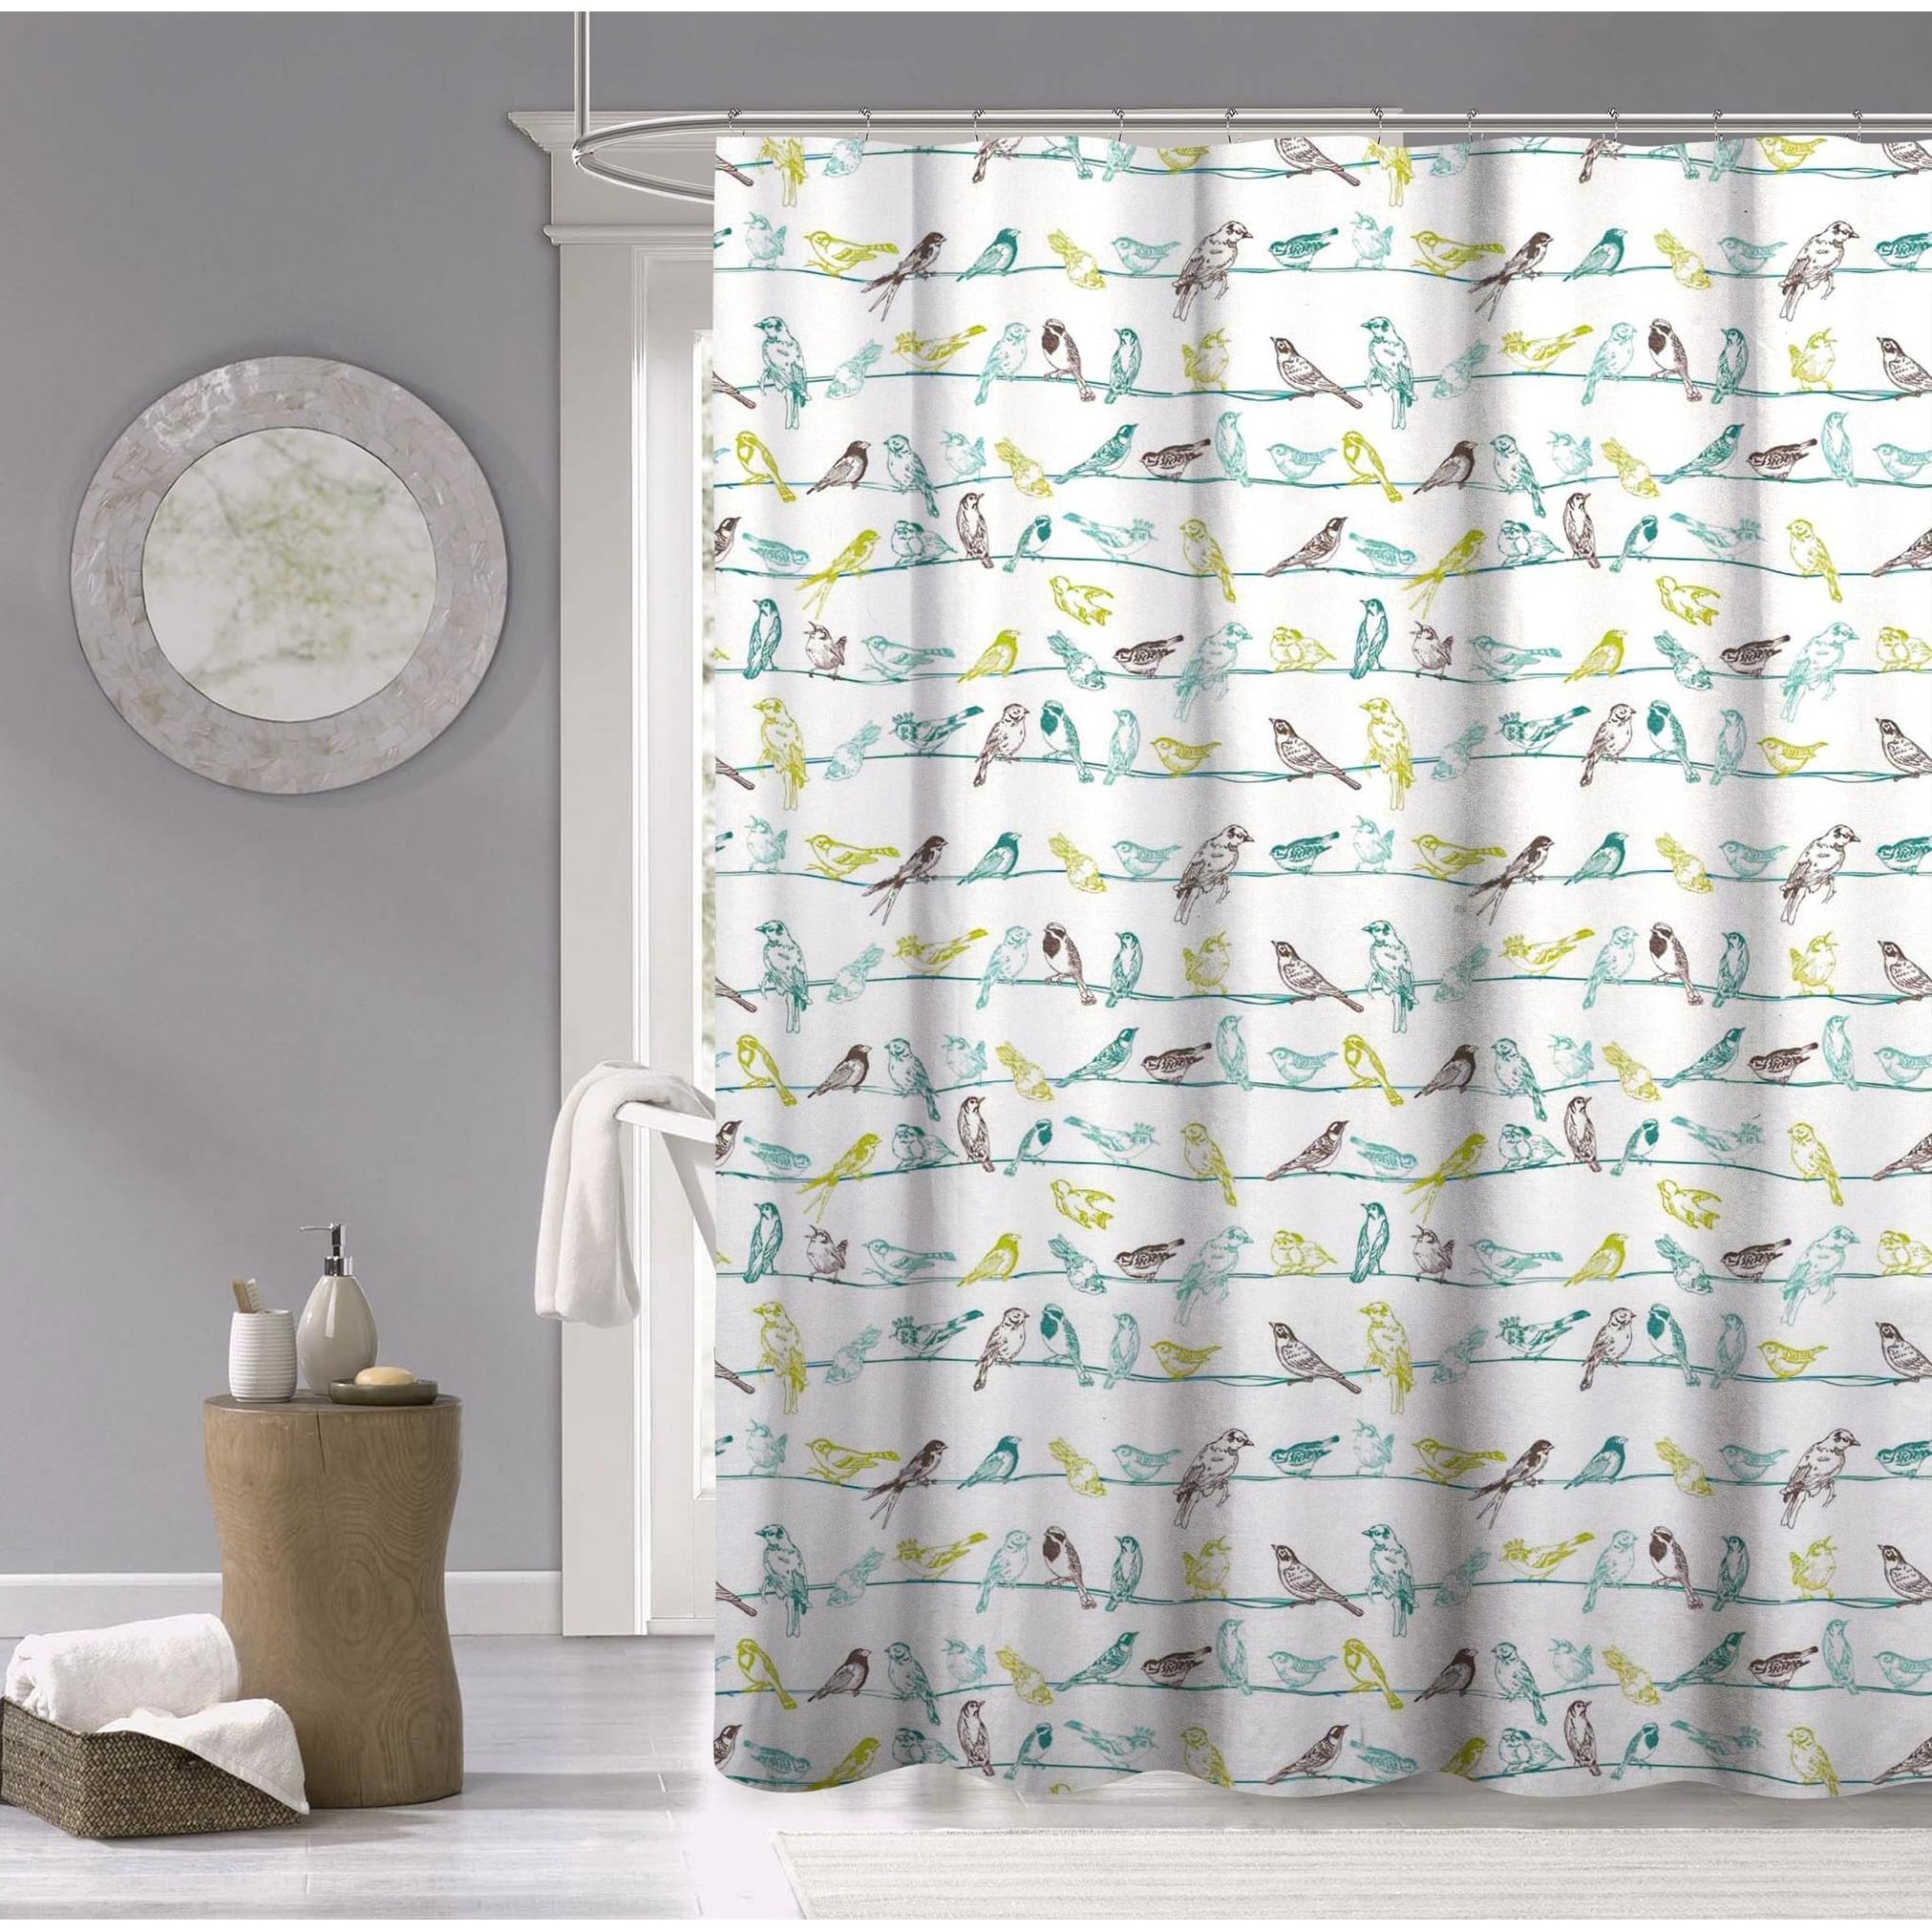 Fishing Tackle Theme Waterproof Fabric Home Decor Shower Curtain Bathroom Mat 